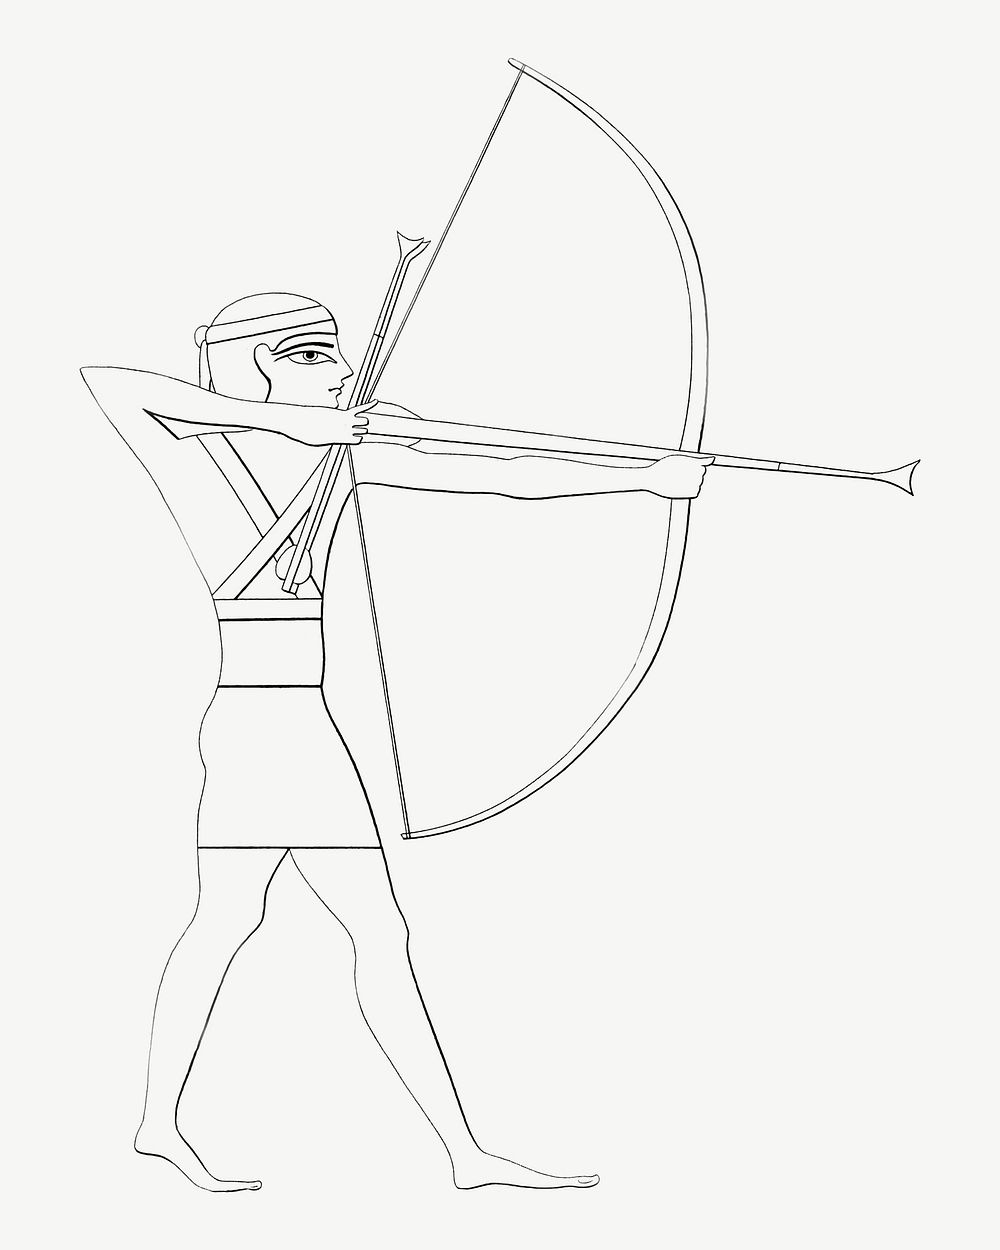 Egypt human archer vintage illustration, collage element psd